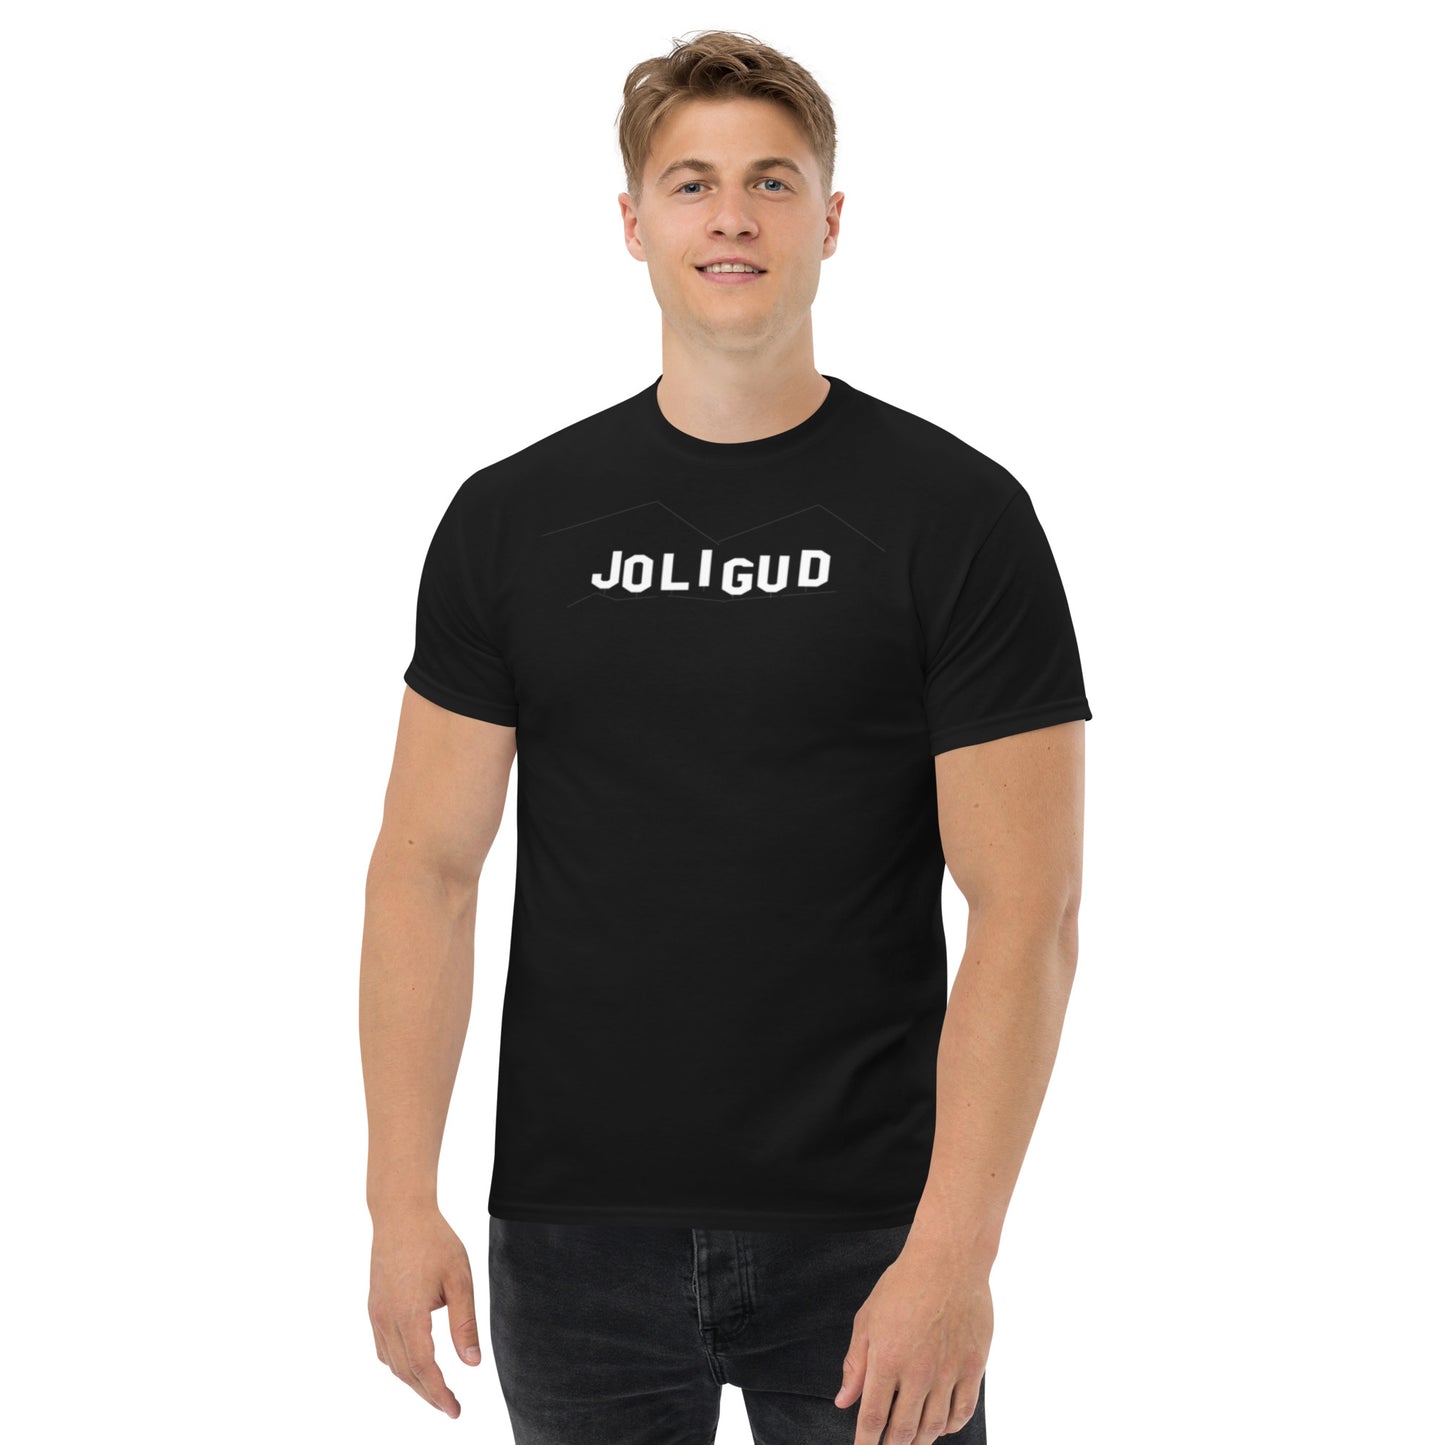 T-shirt "joligud"